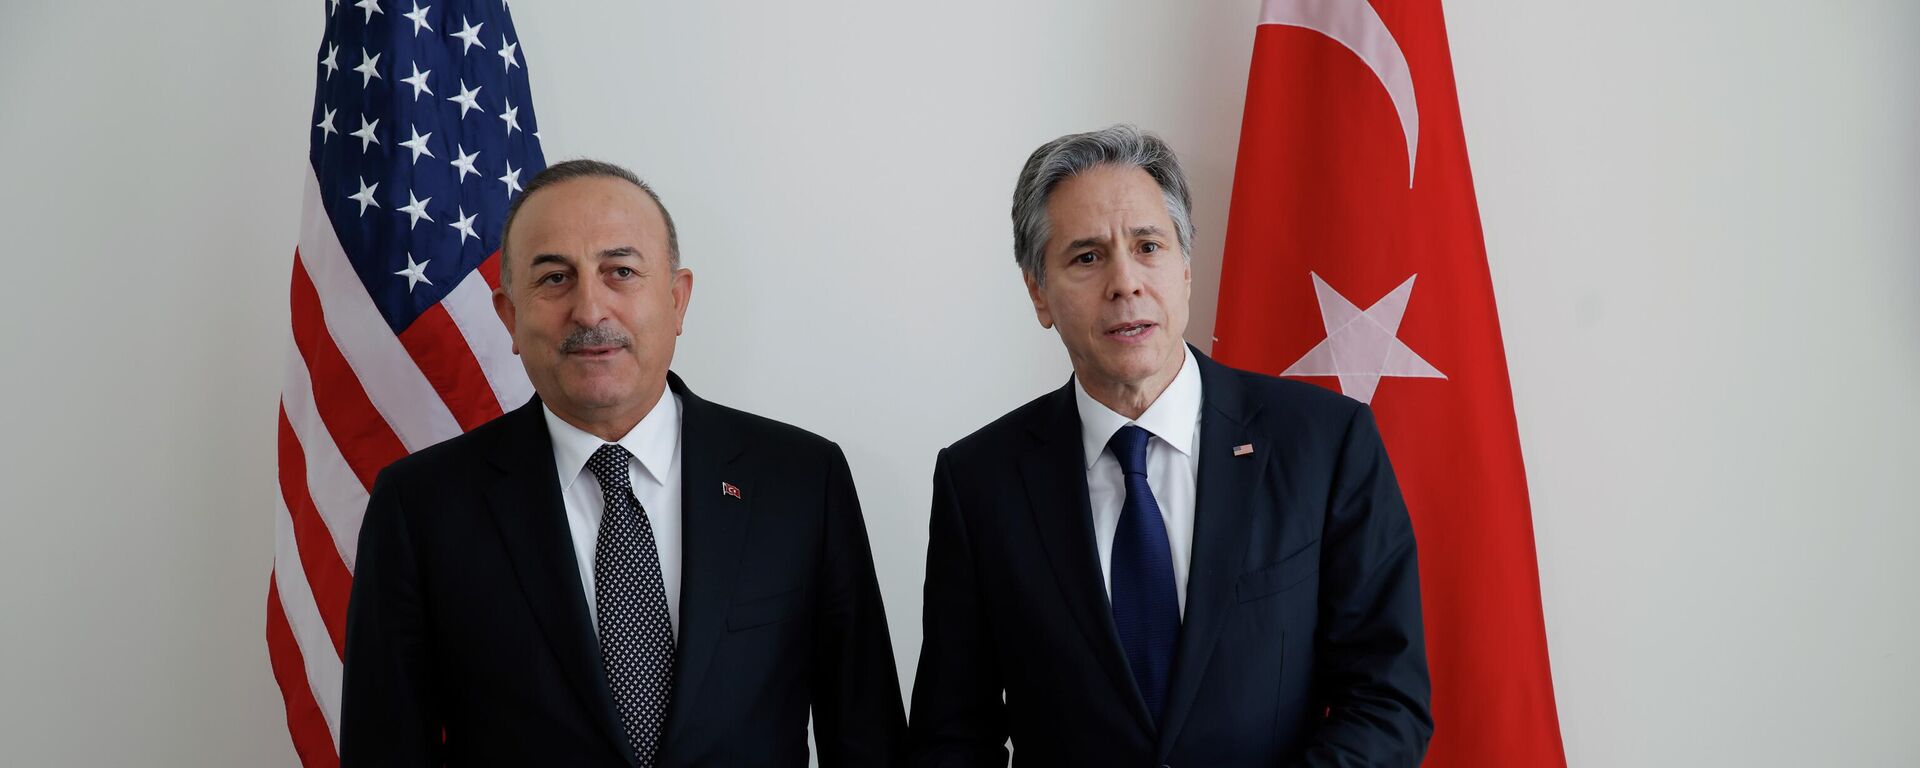 U.S. Secretary of State Antony Blinken meets with Turkish Foreign Minister Mevlut Cavusoglu at the United Nations Wednesday, May 18, 2022. - Sputnik International, 1920, 18.05.2022